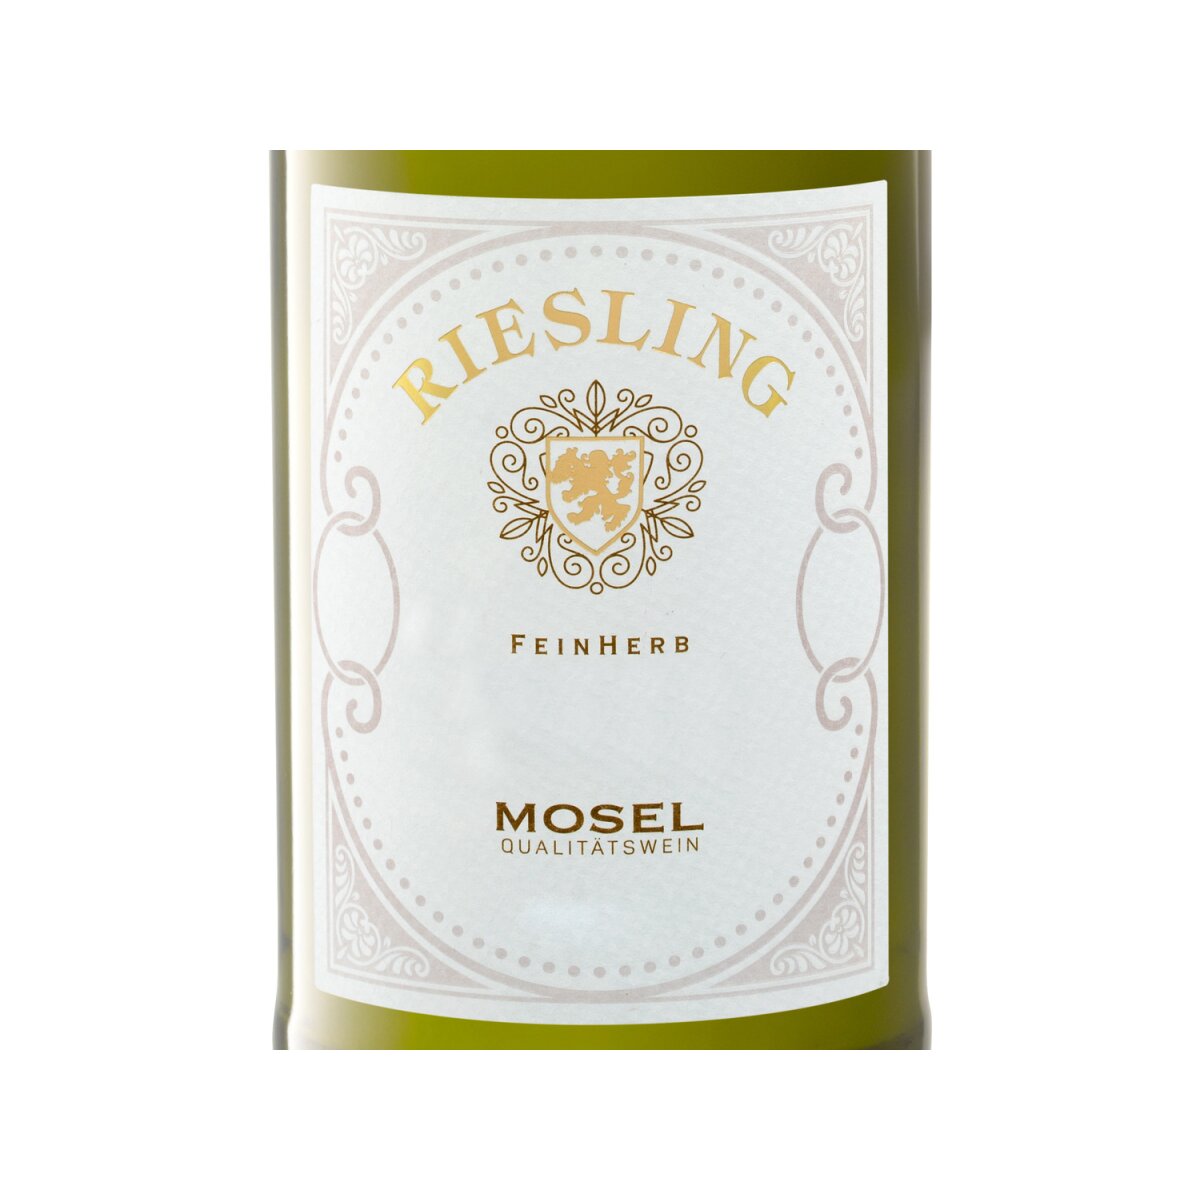 Riesling 2,99 2022, Brauneberger QbA feinherb, Kurfürstlay € Weißwein Mosel